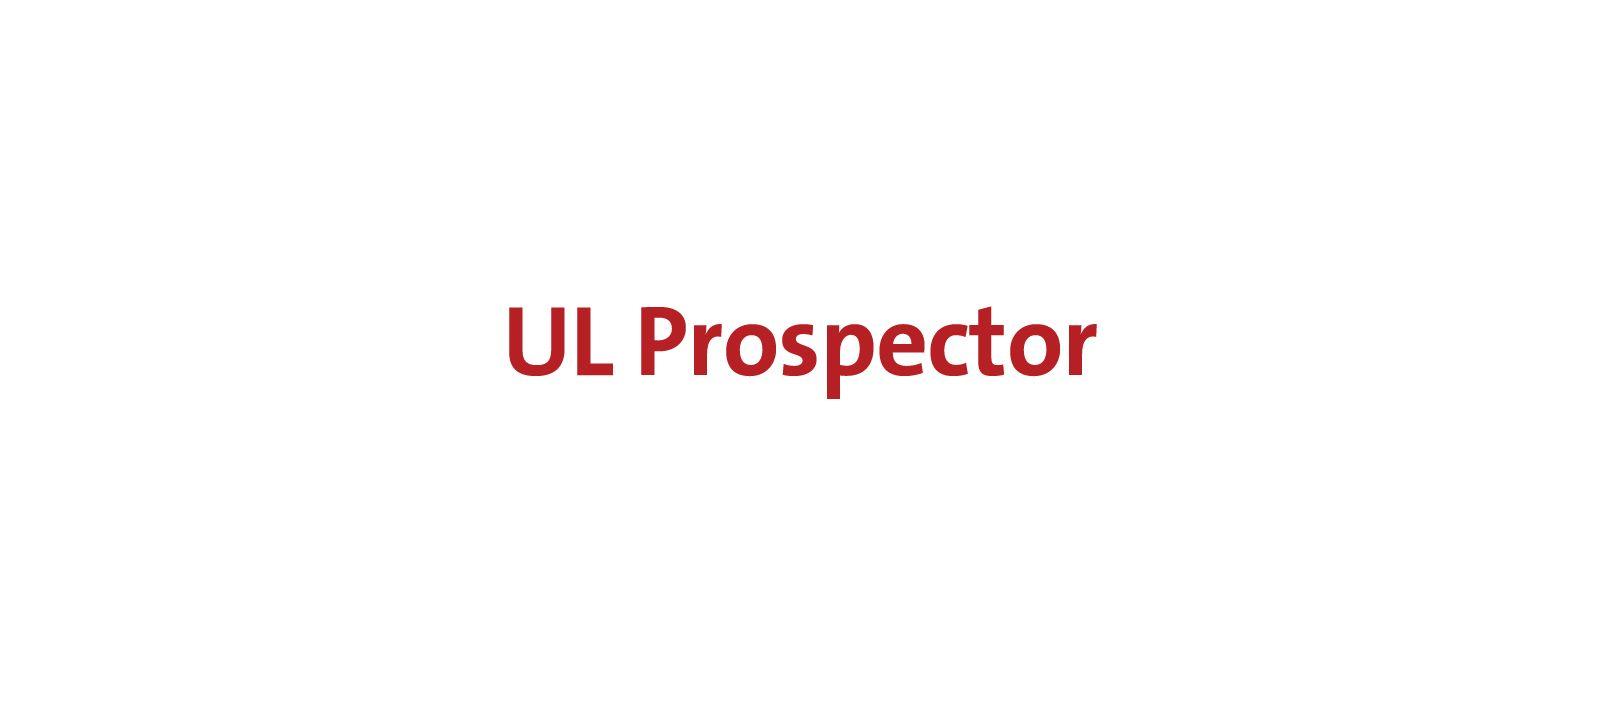 Prospector Logo - UL Prospector | ColinKurtis